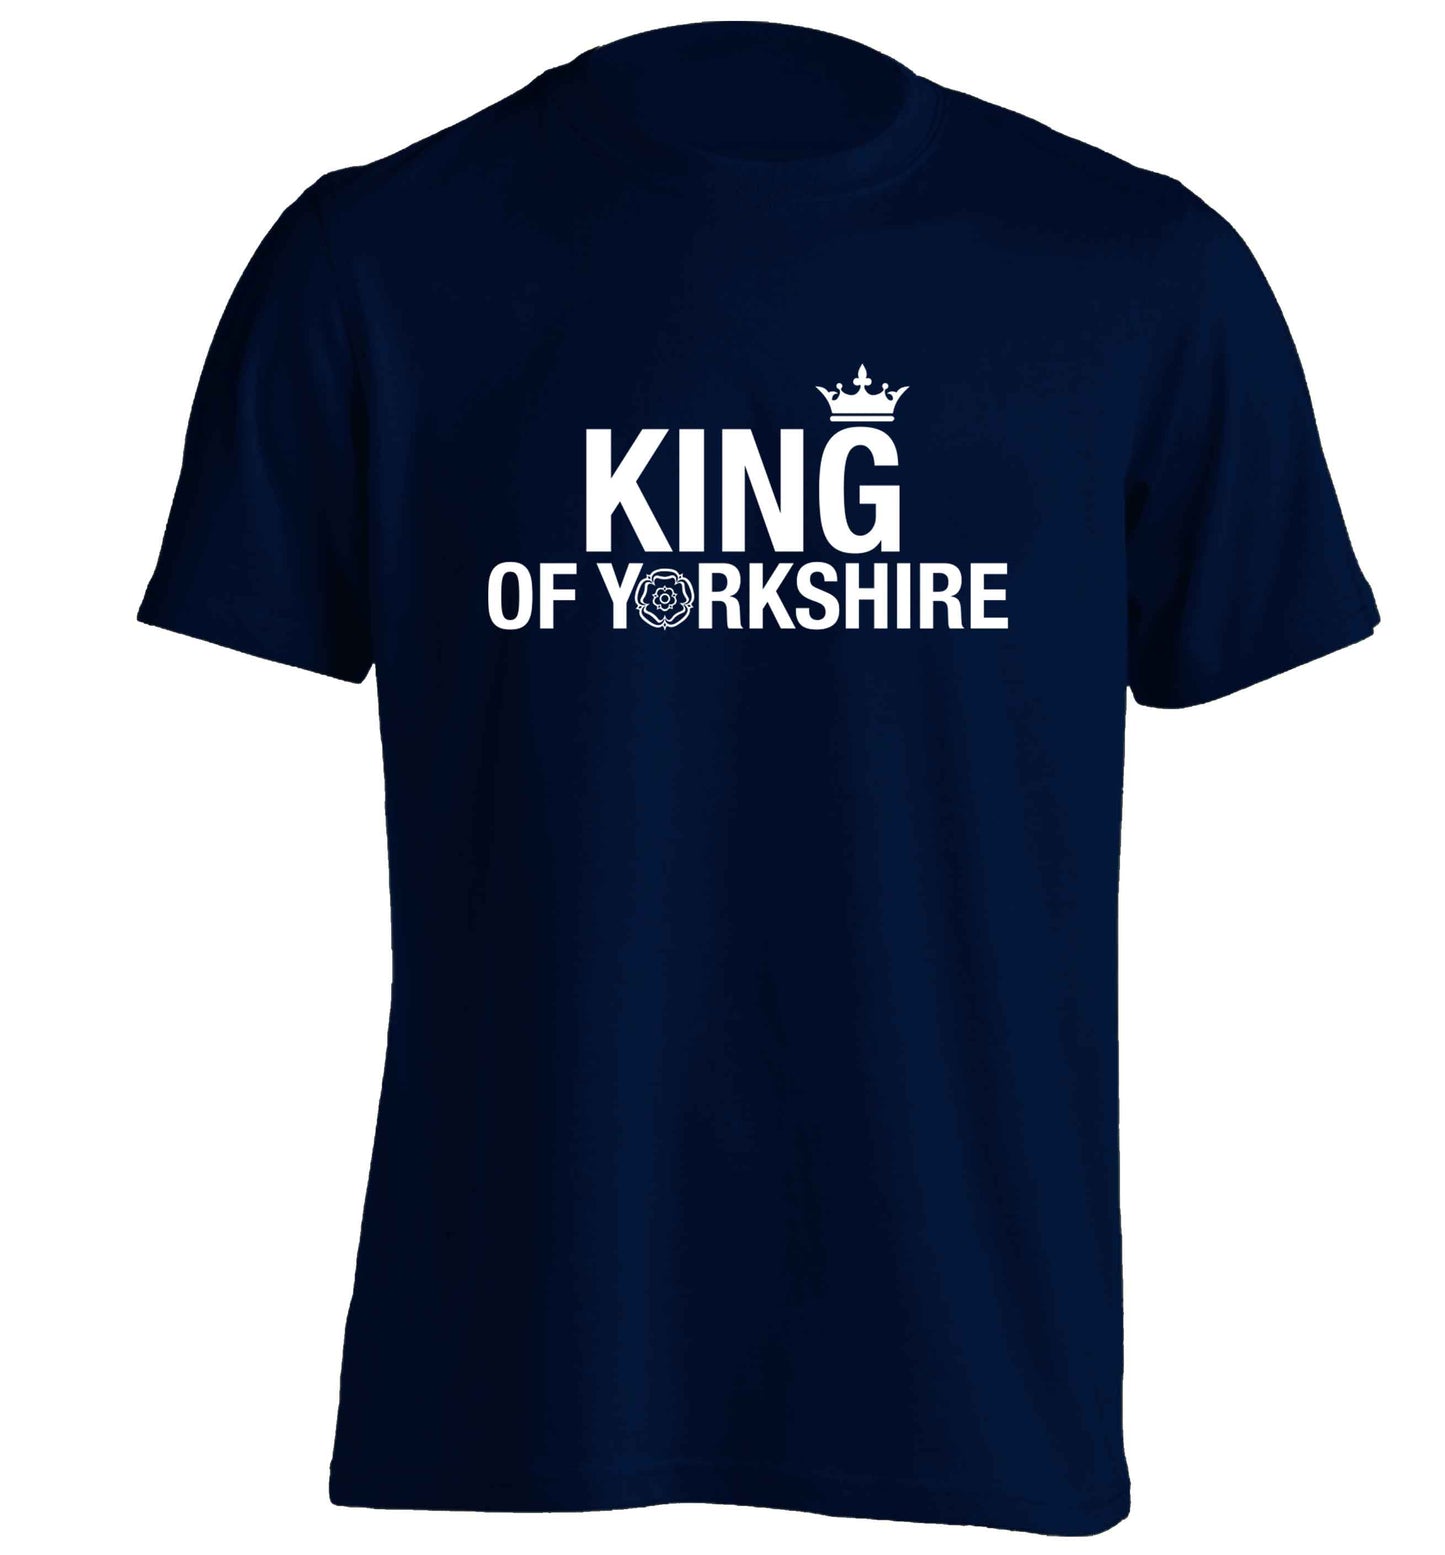 King of Yorkshire adults unisex navy Tshirt 2XL